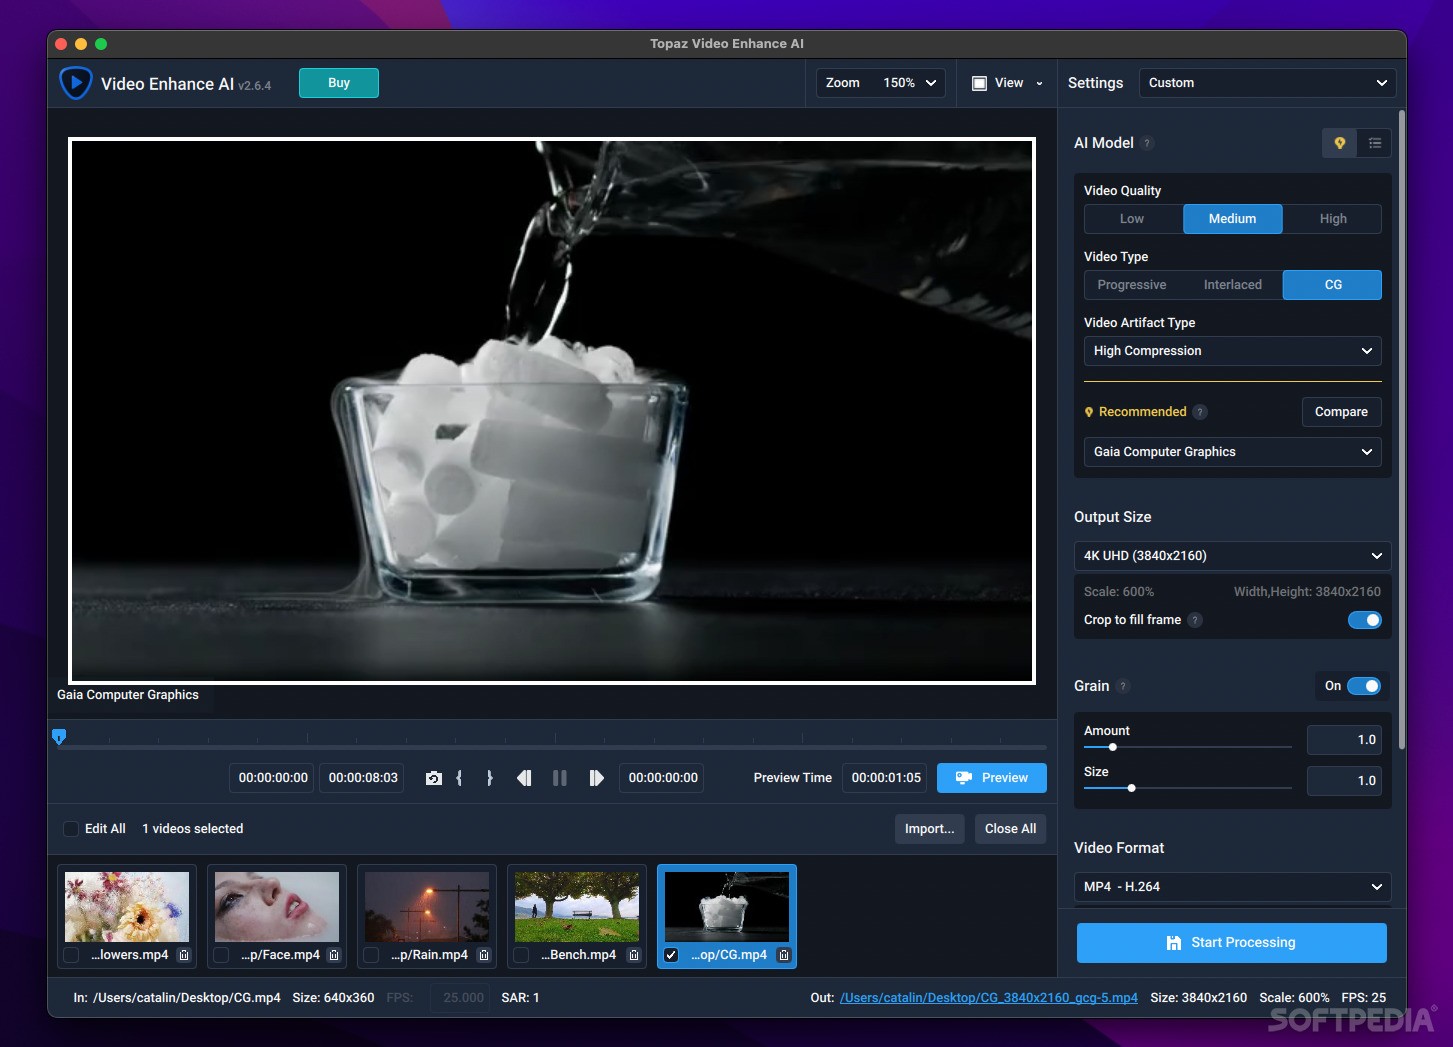 Topaz Video Enhance AI 3.5.2 instal the new version for windows